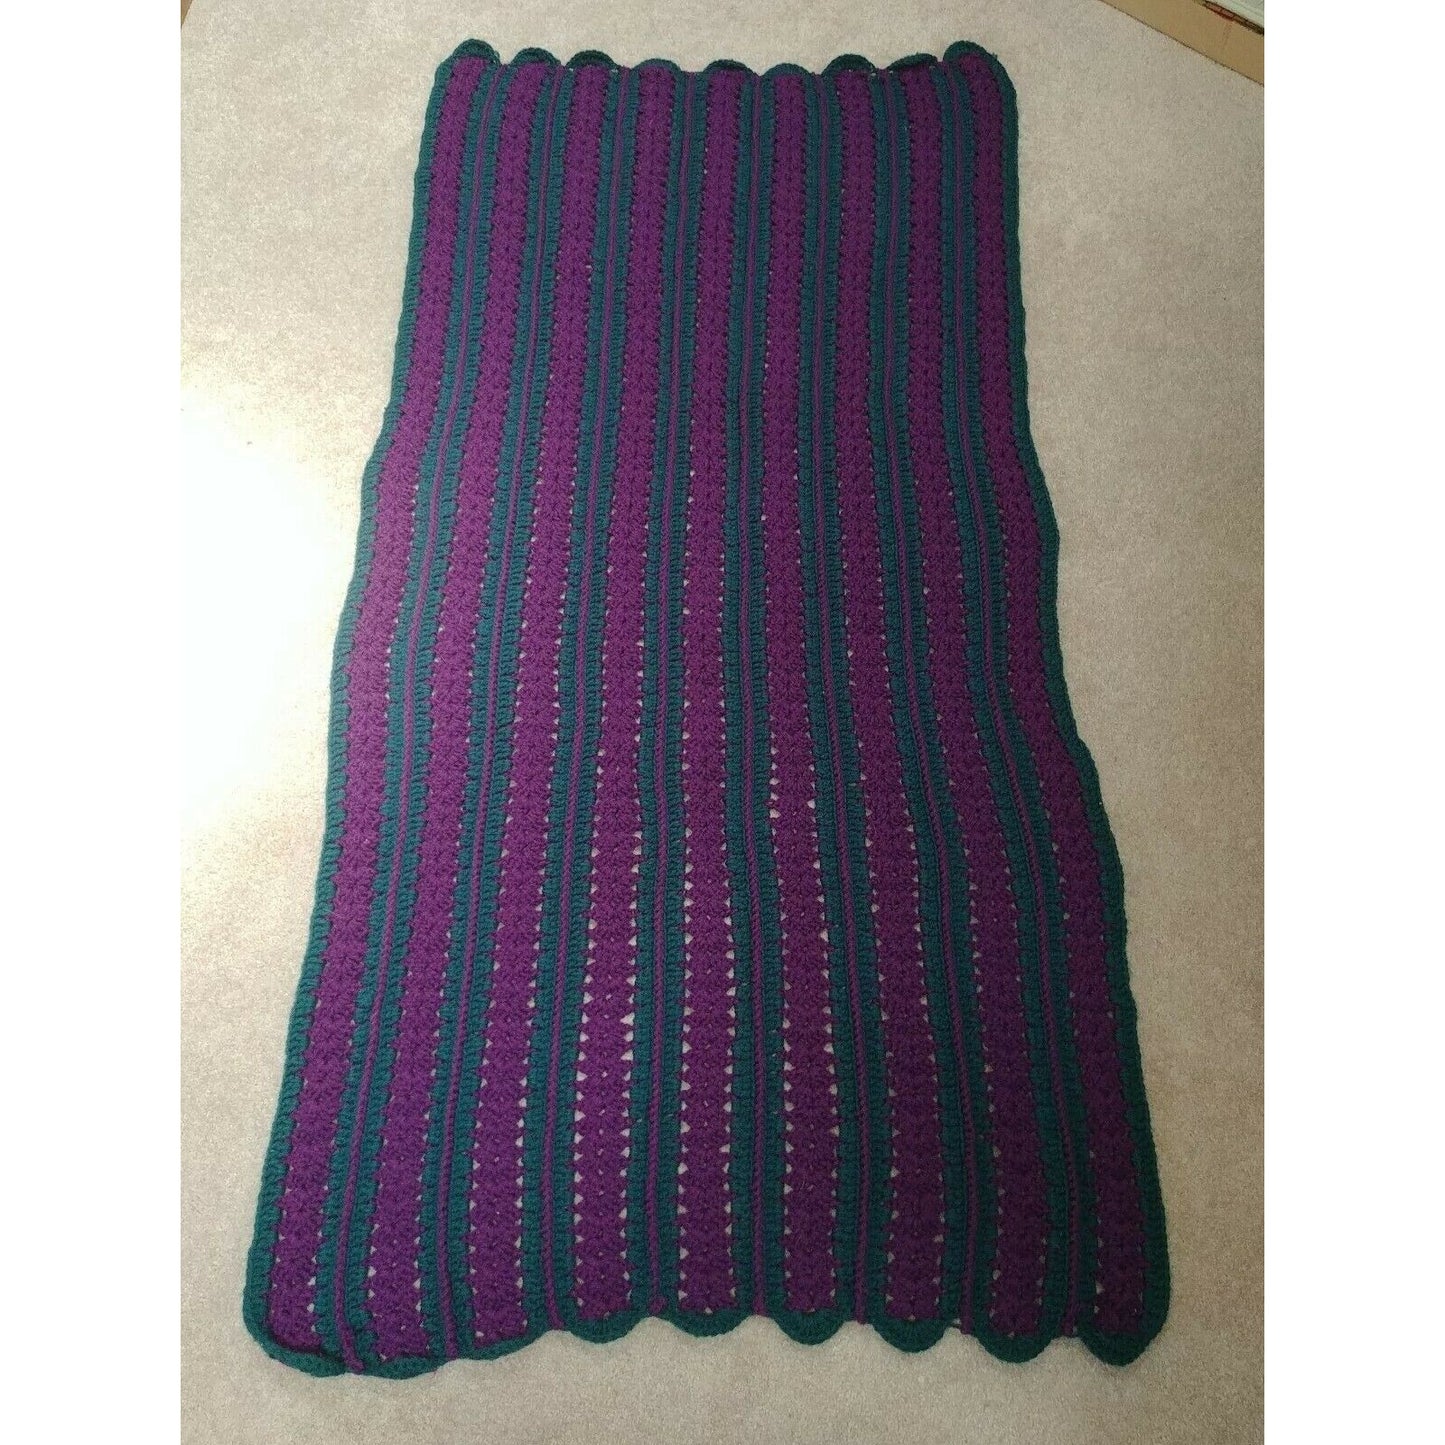 Crochet Handmade Afghan Blanket Pattern Throw 76" x 66" Purple Forest Green